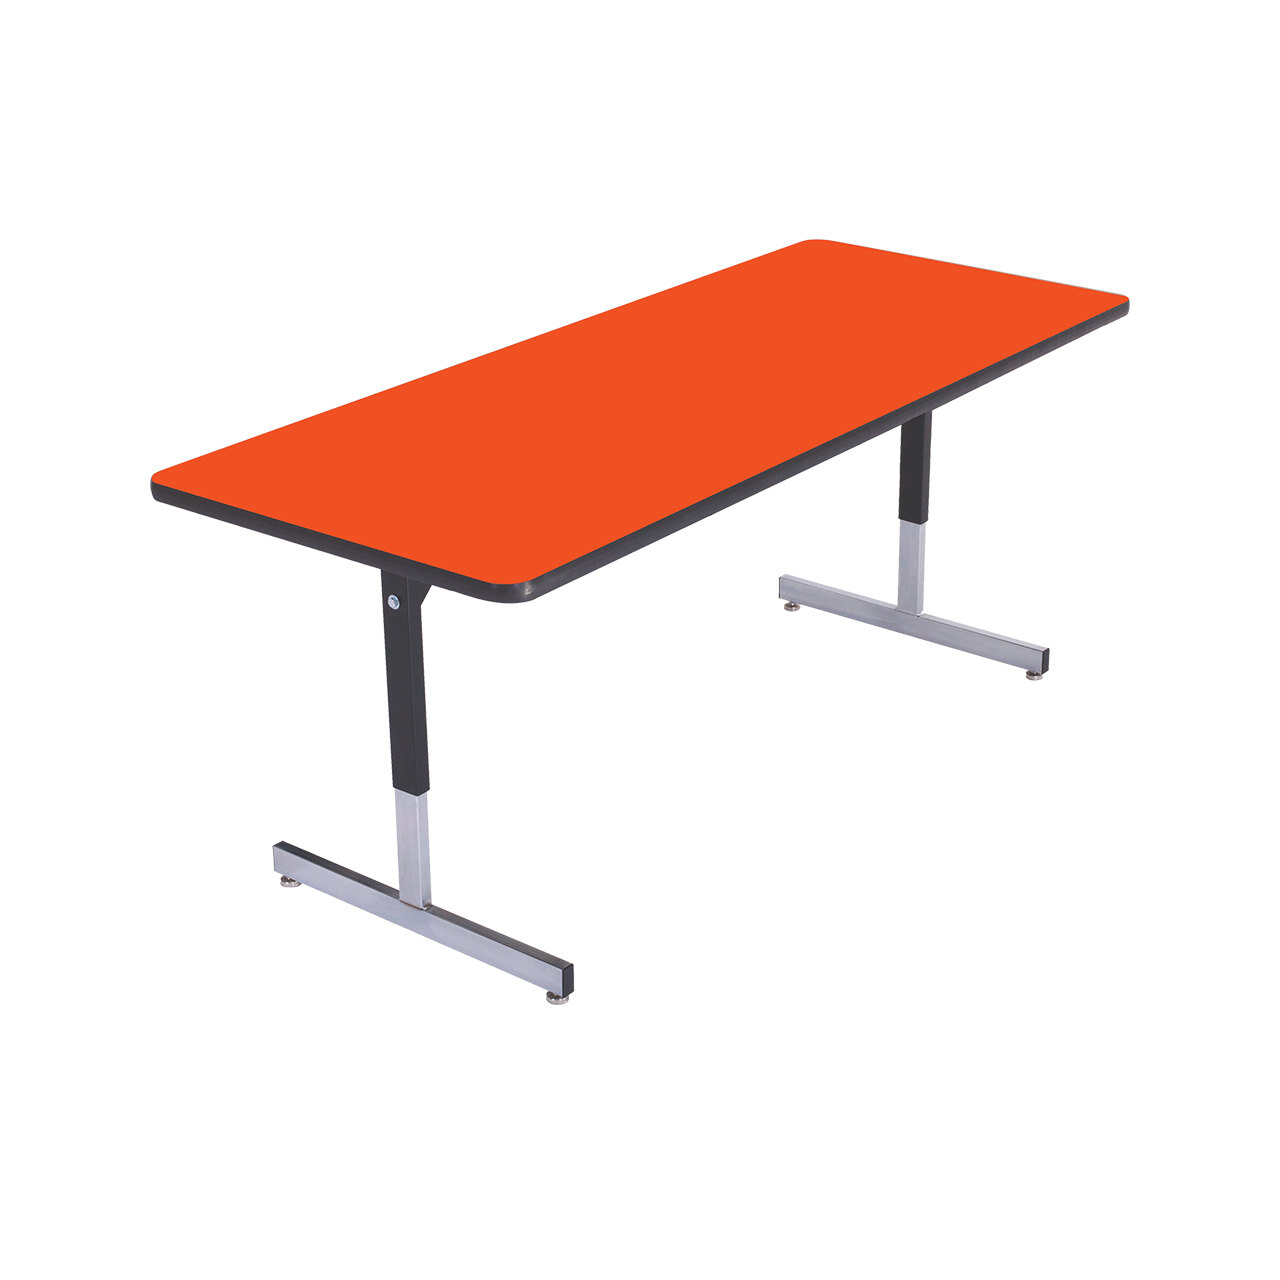 Pedestal Folding Table Legs